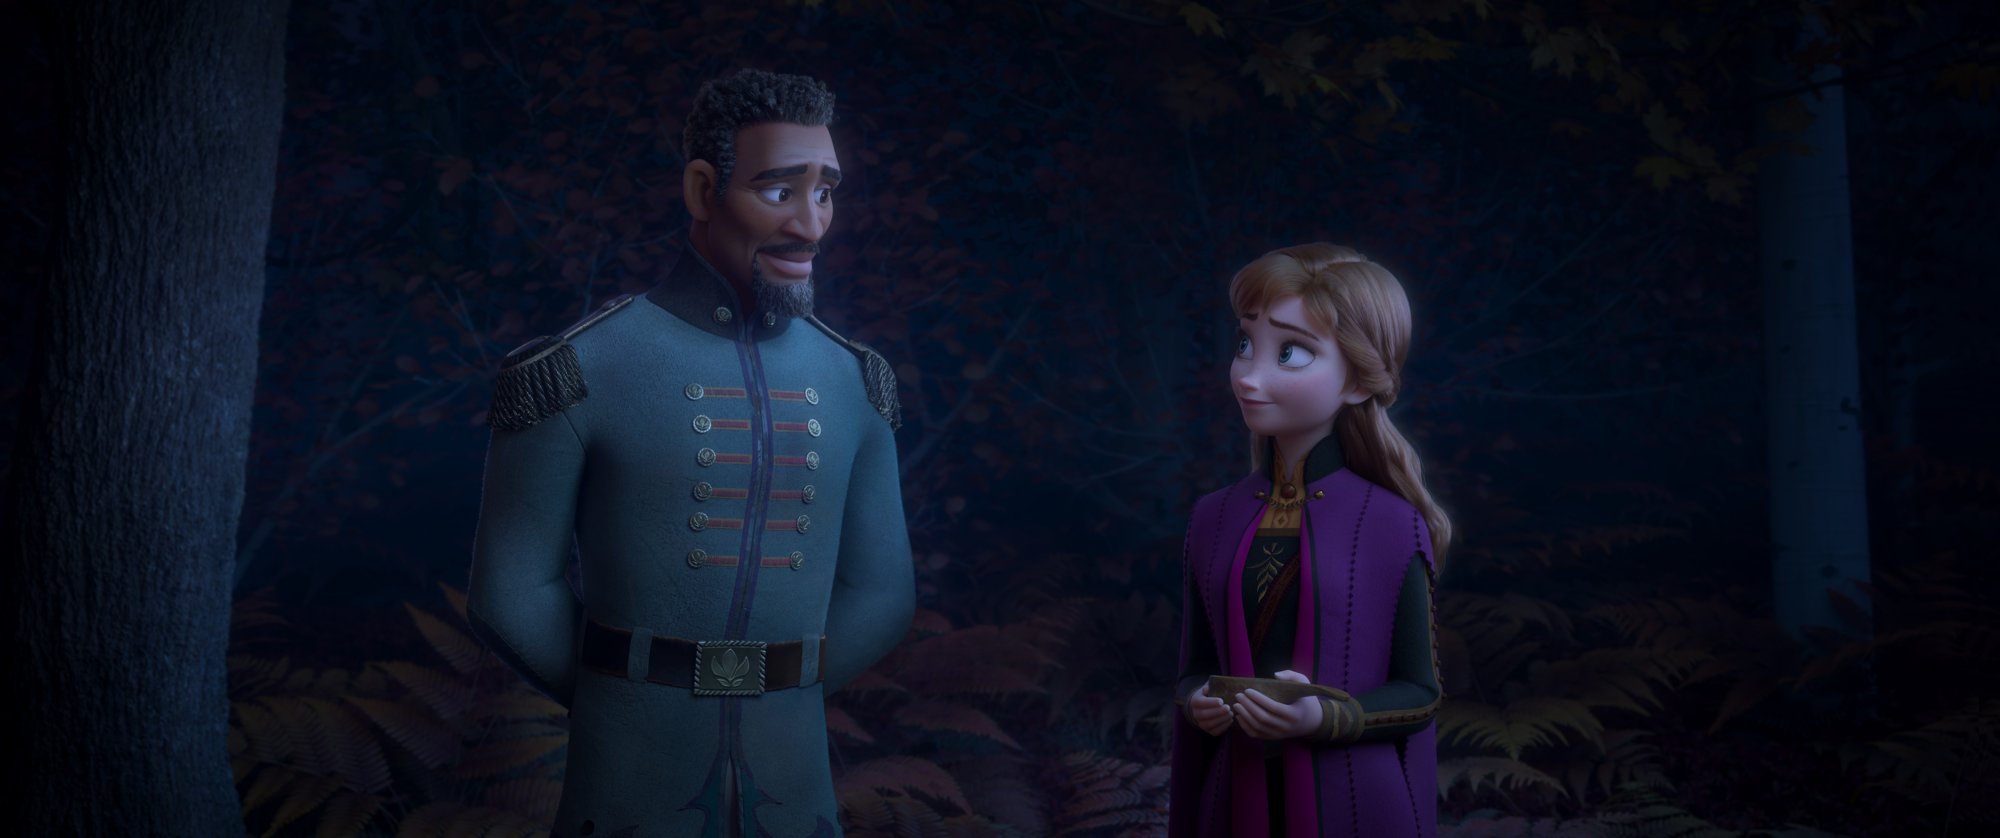 Mattias and Anna from Walt Disney Pictures' Frozen II (2019)